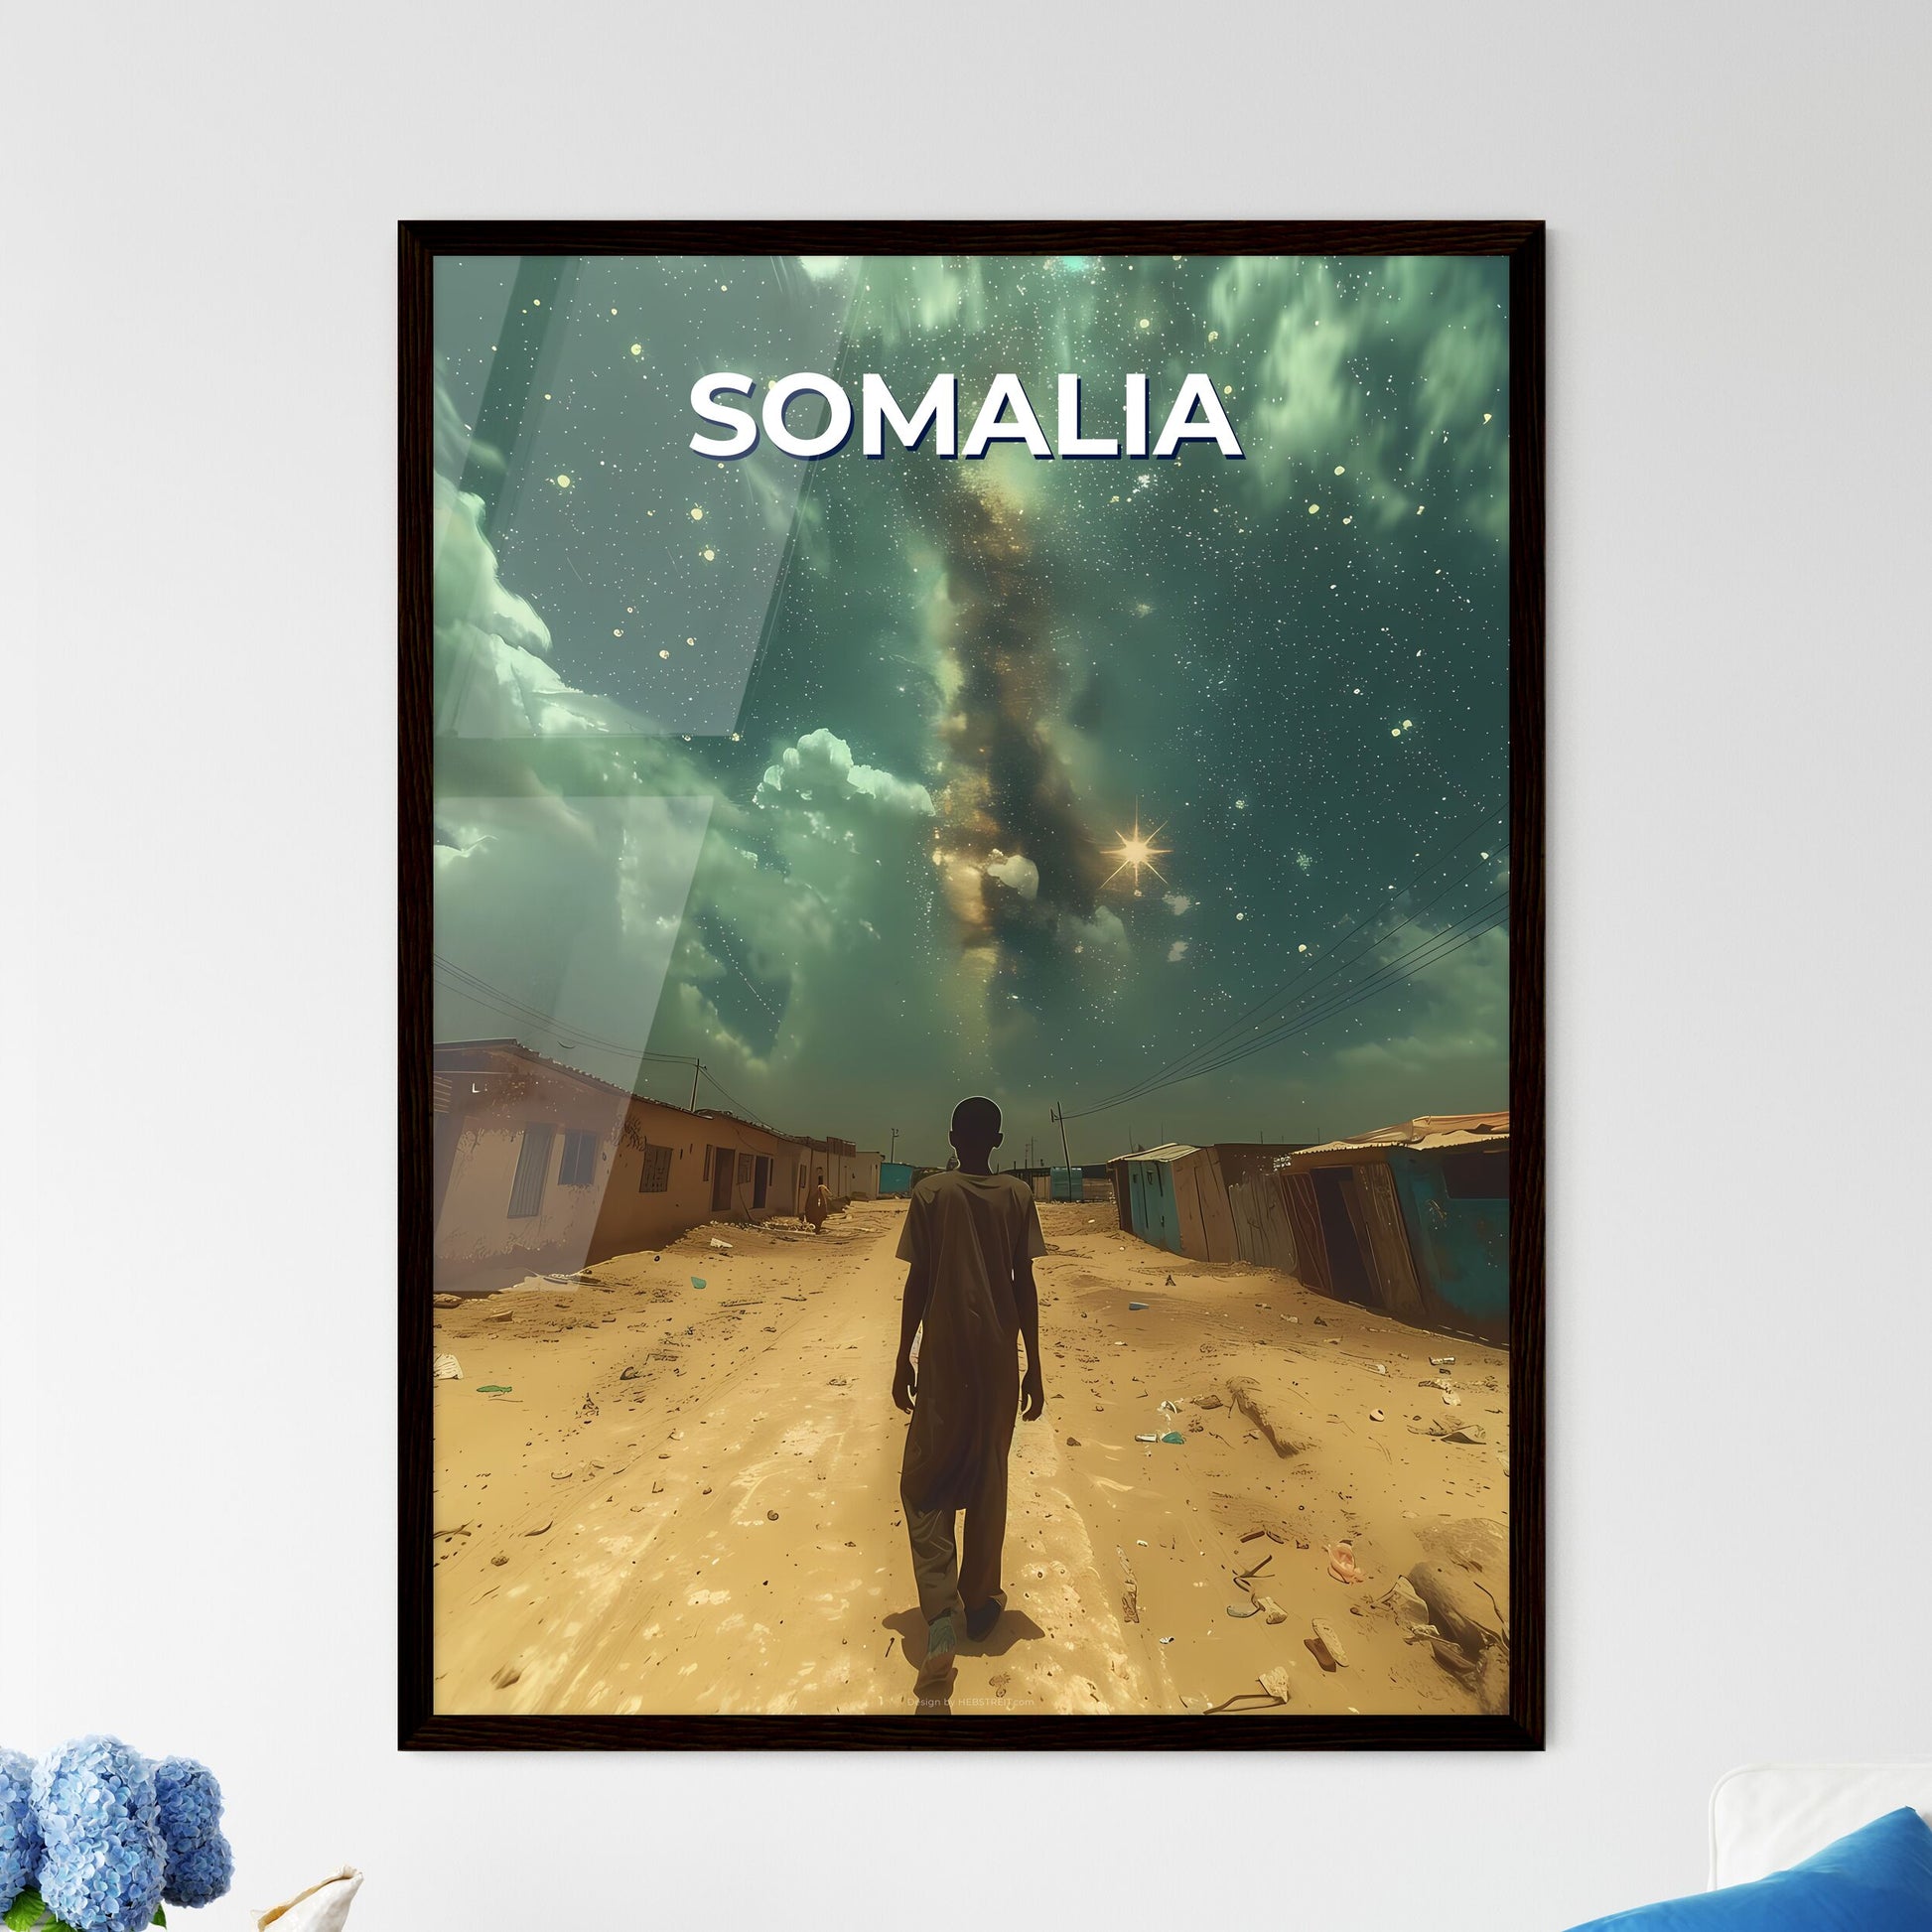 African Art, Somalia, Vibrant Painting, Dirt Road, Buildings, Stars, Night Sky